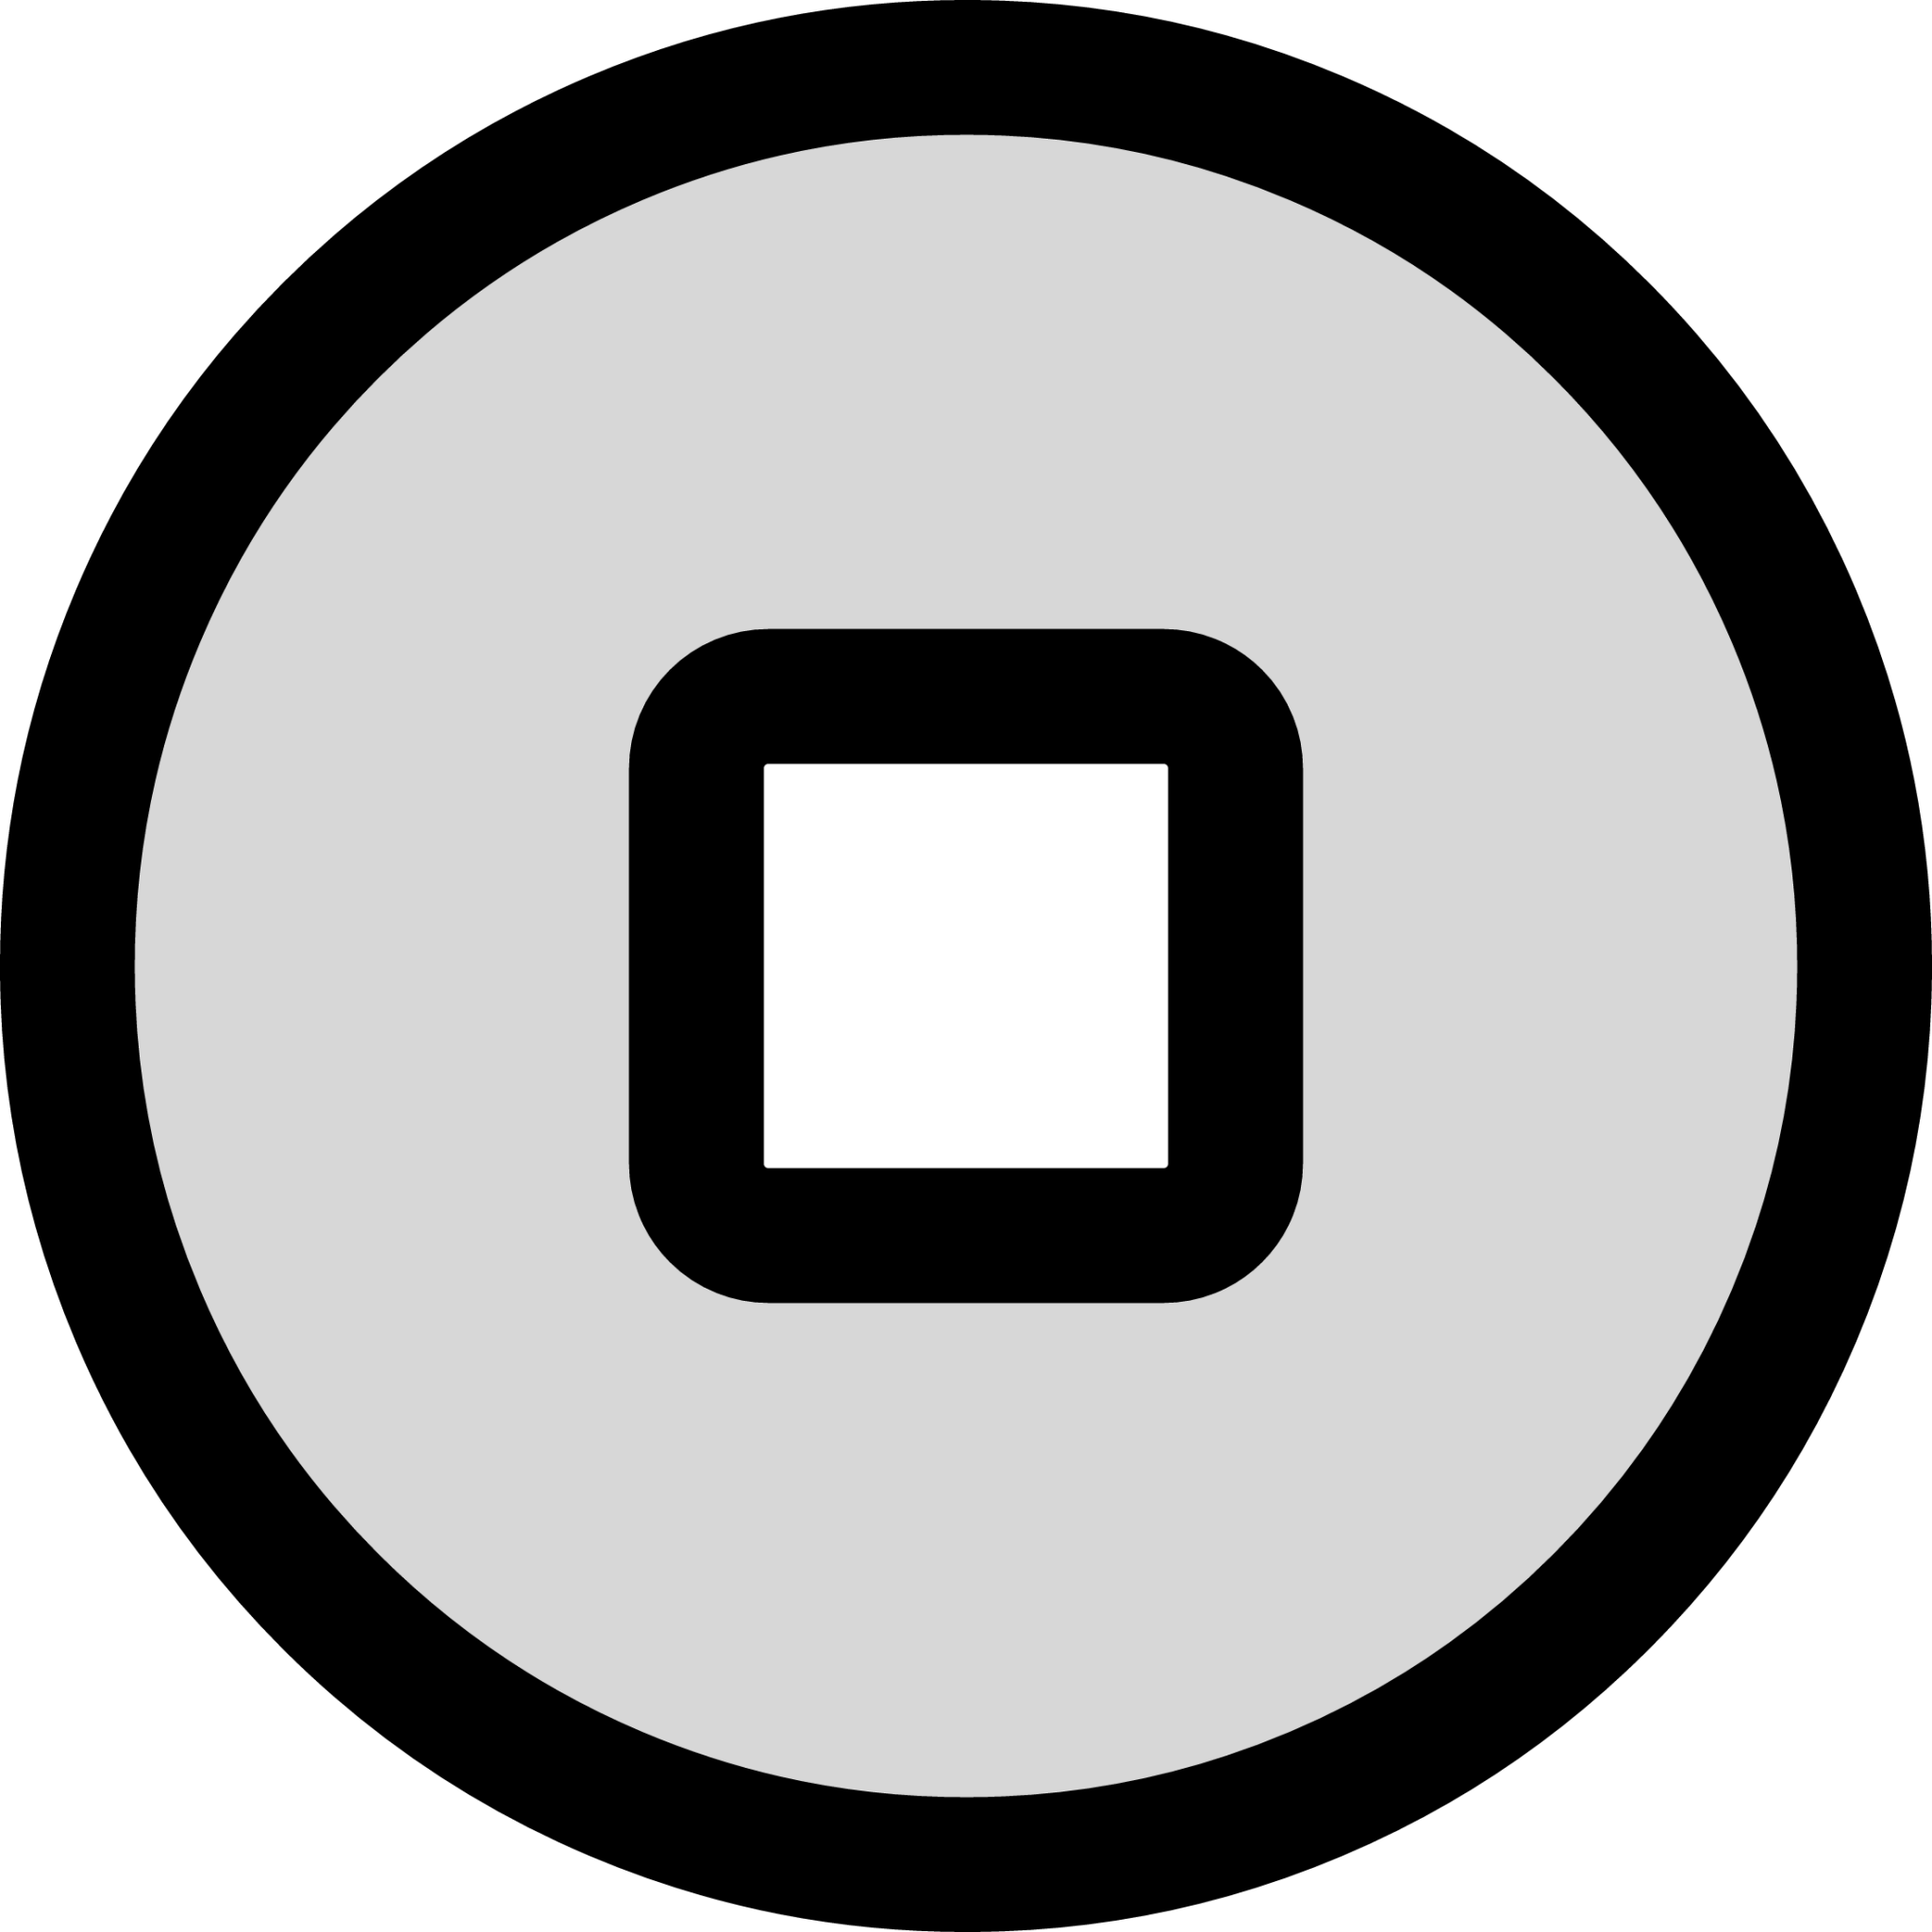 Stop circle (duotone) icon